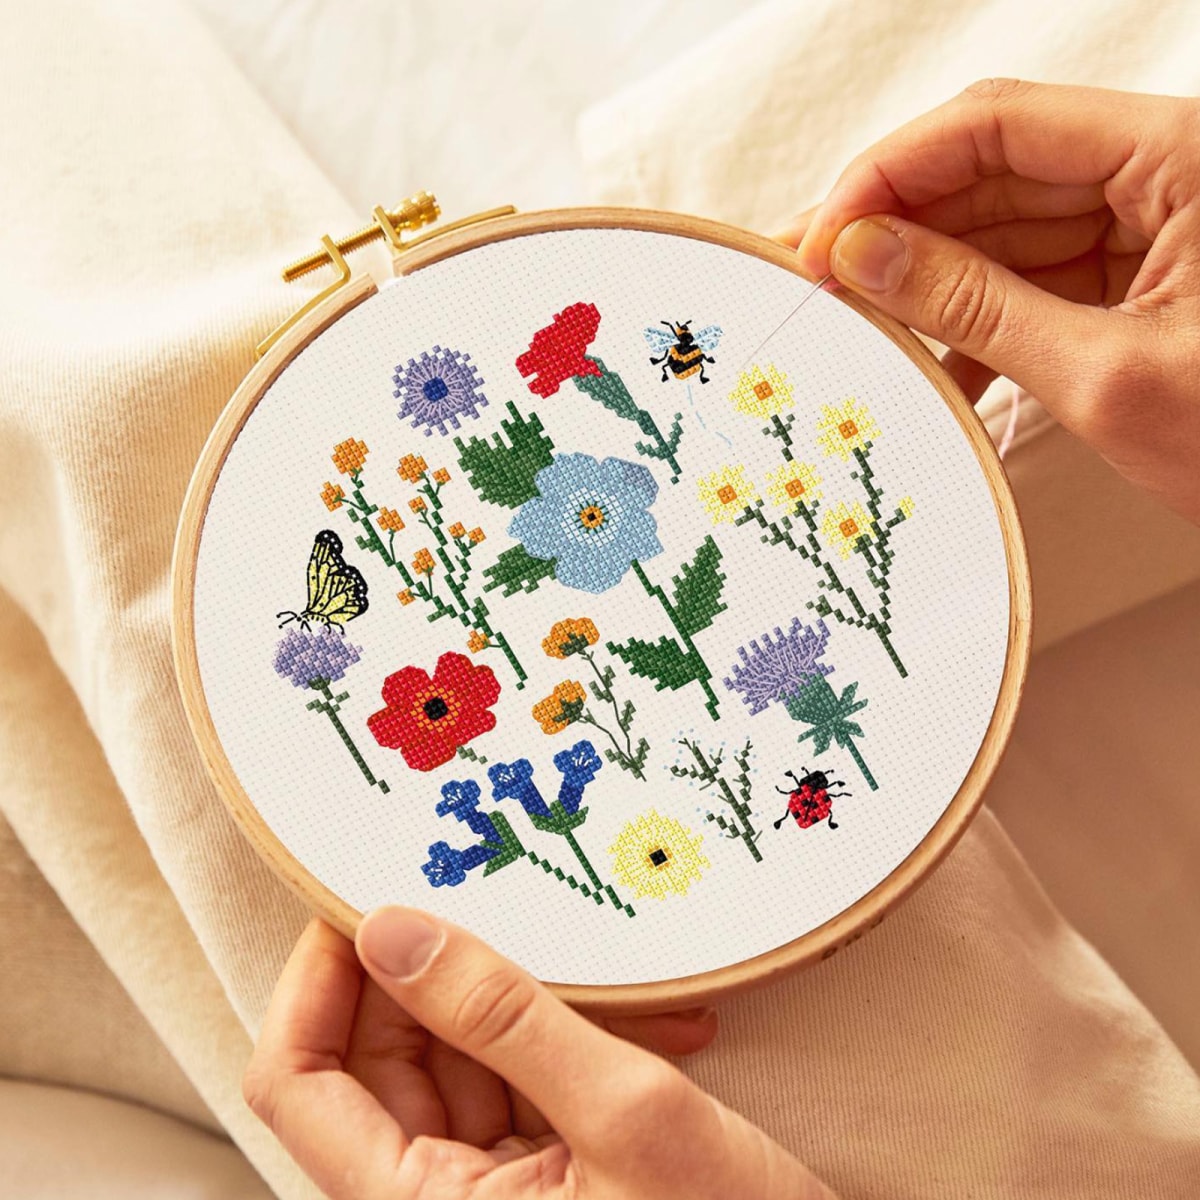 Sweet & Simple Embroidery: A Delicate & Easy Monogram – NeedlenThread.com